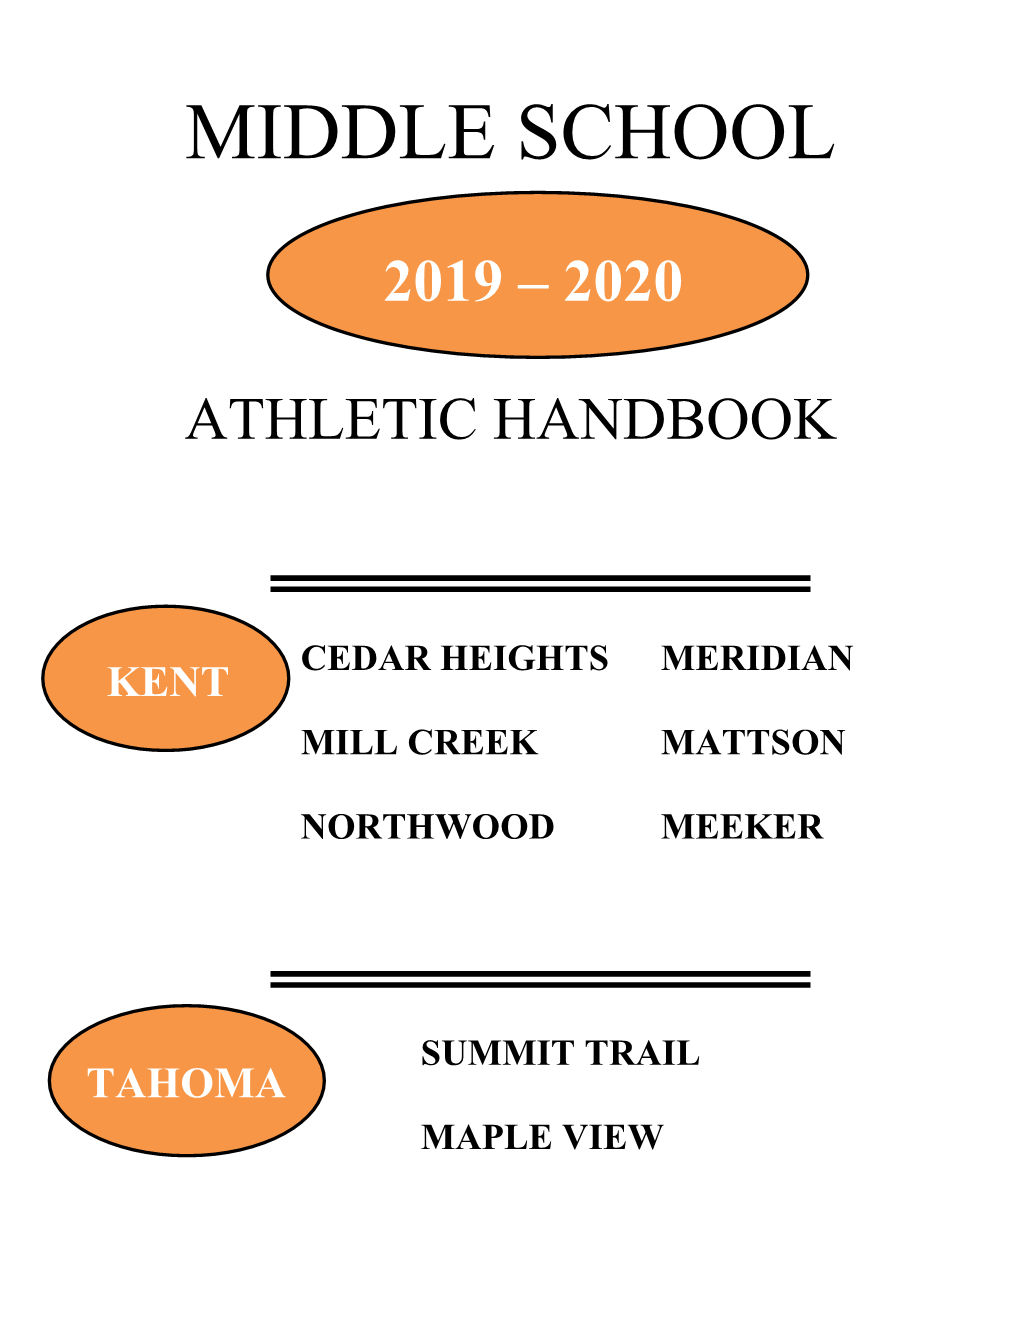 KSD Middle School Athletic Handbook